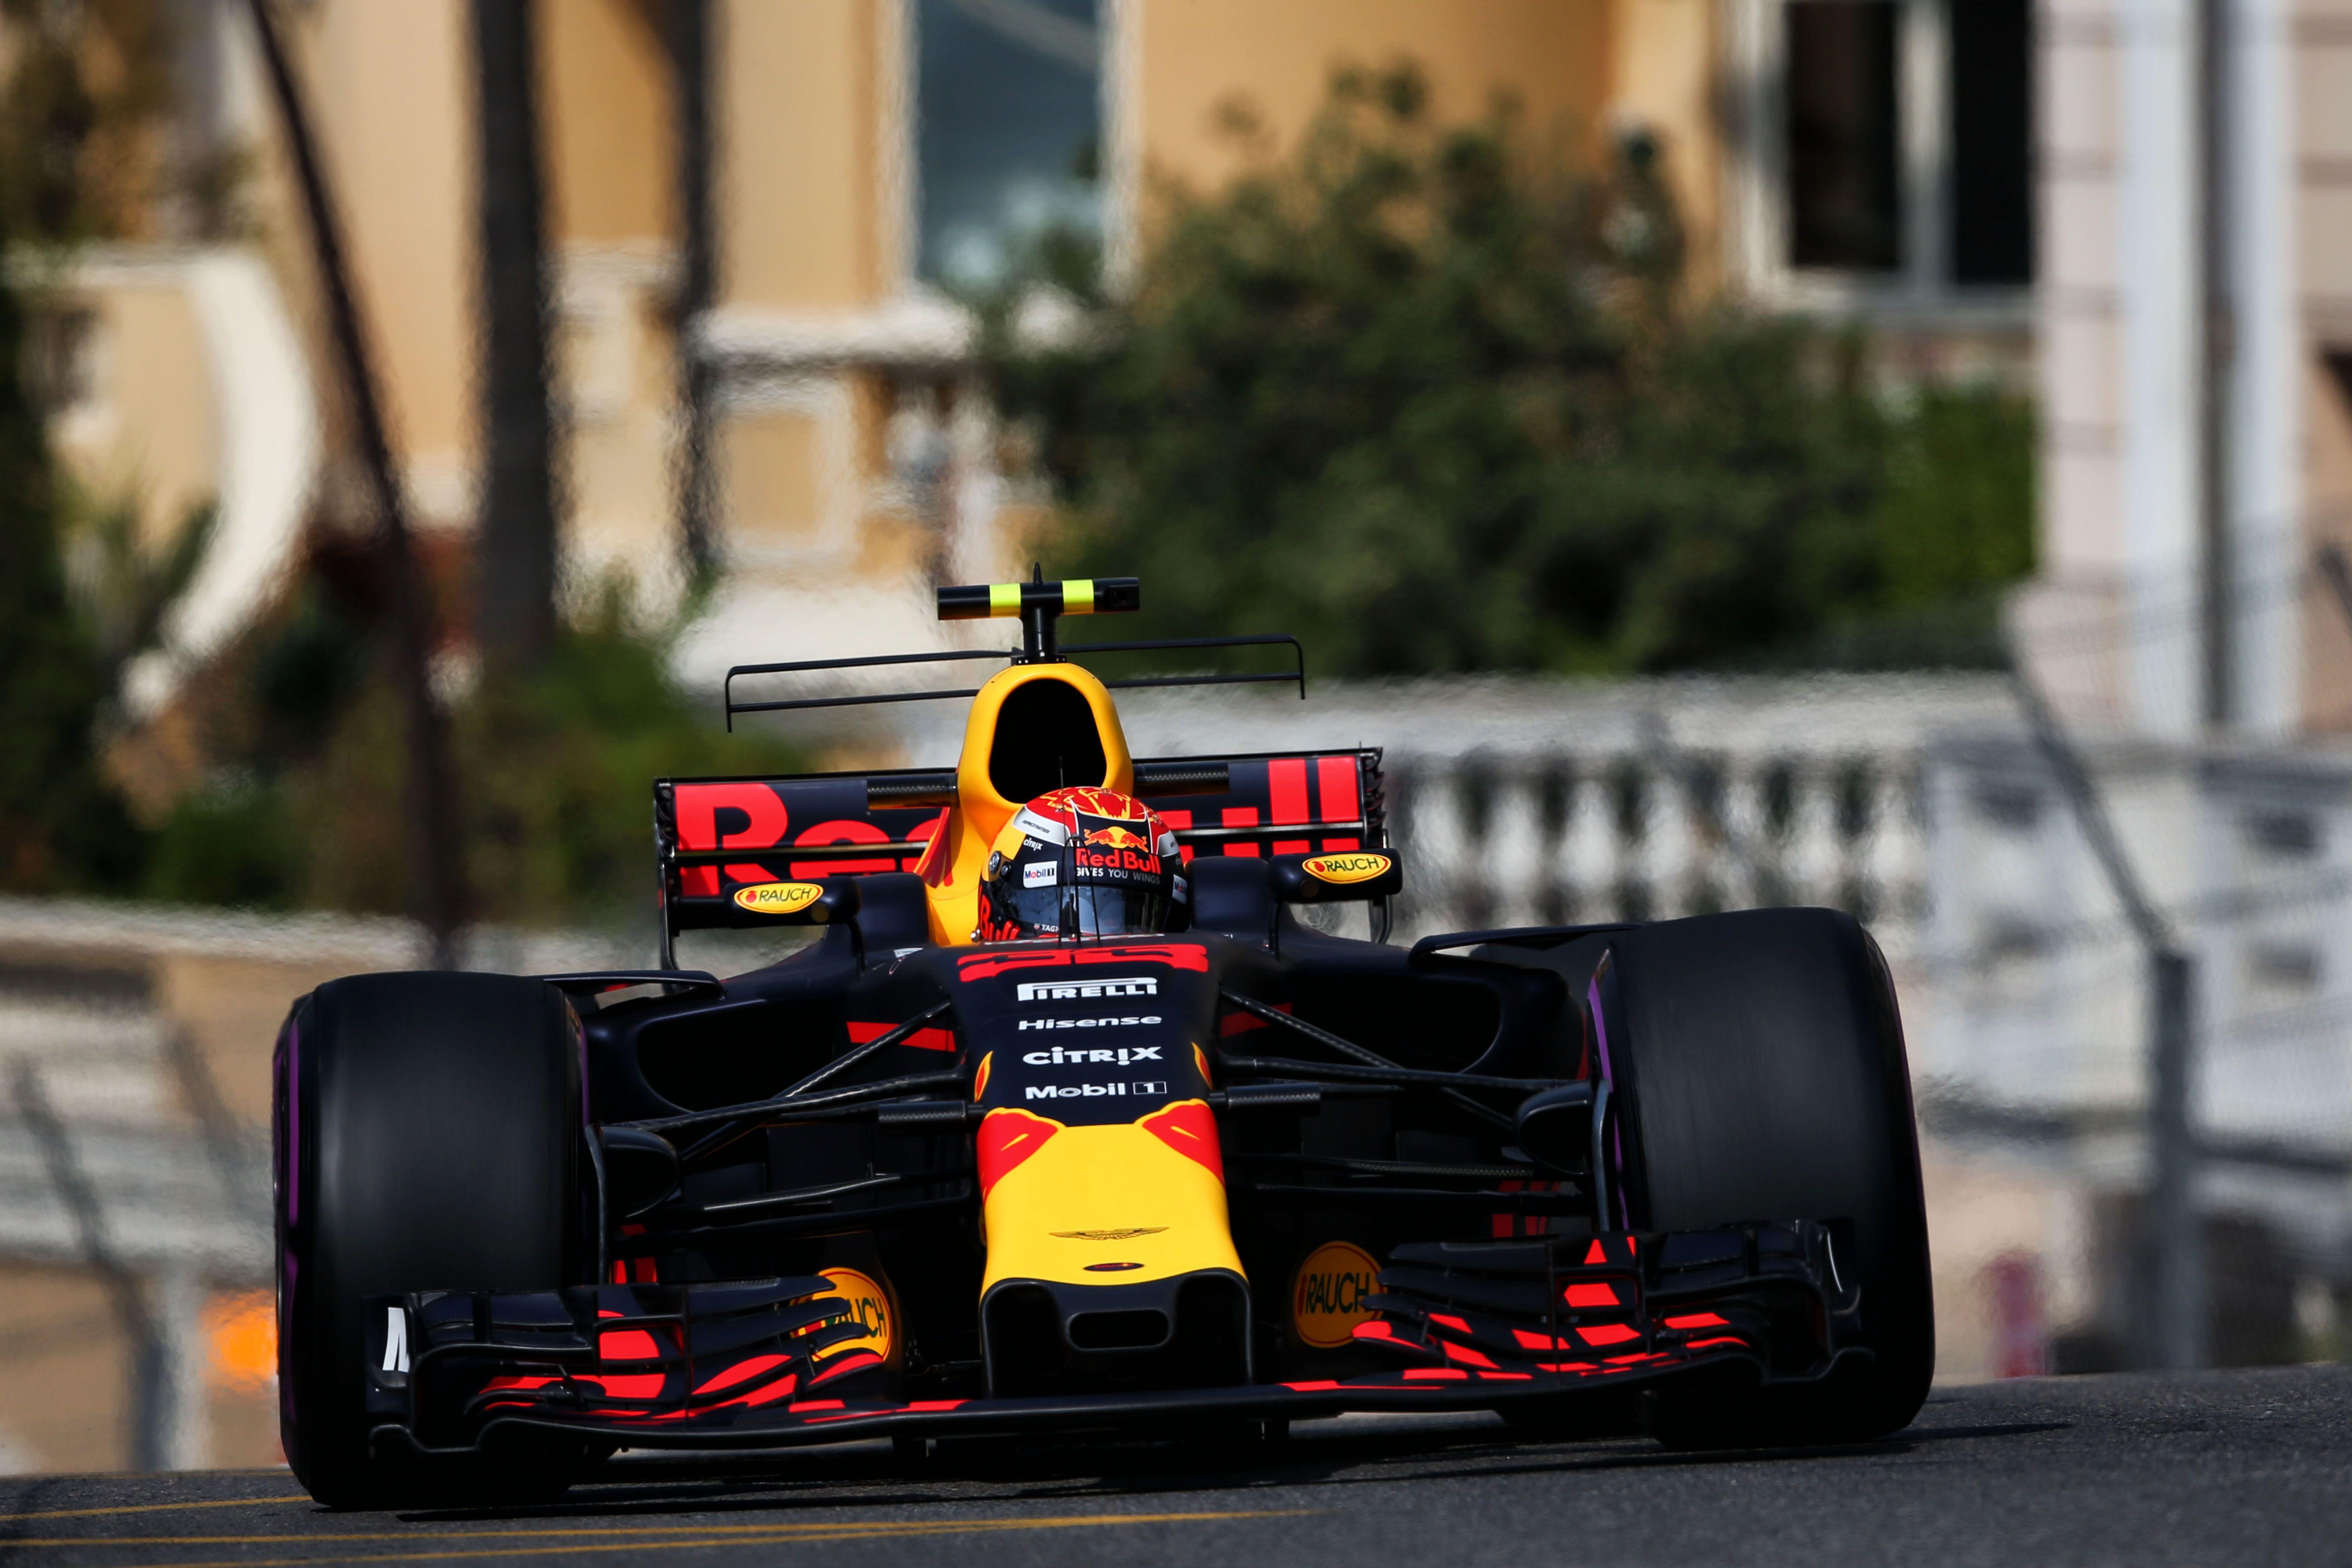 Monaco GP Max Verstappen, Red Bull RB13 Tag Heuer, 5th